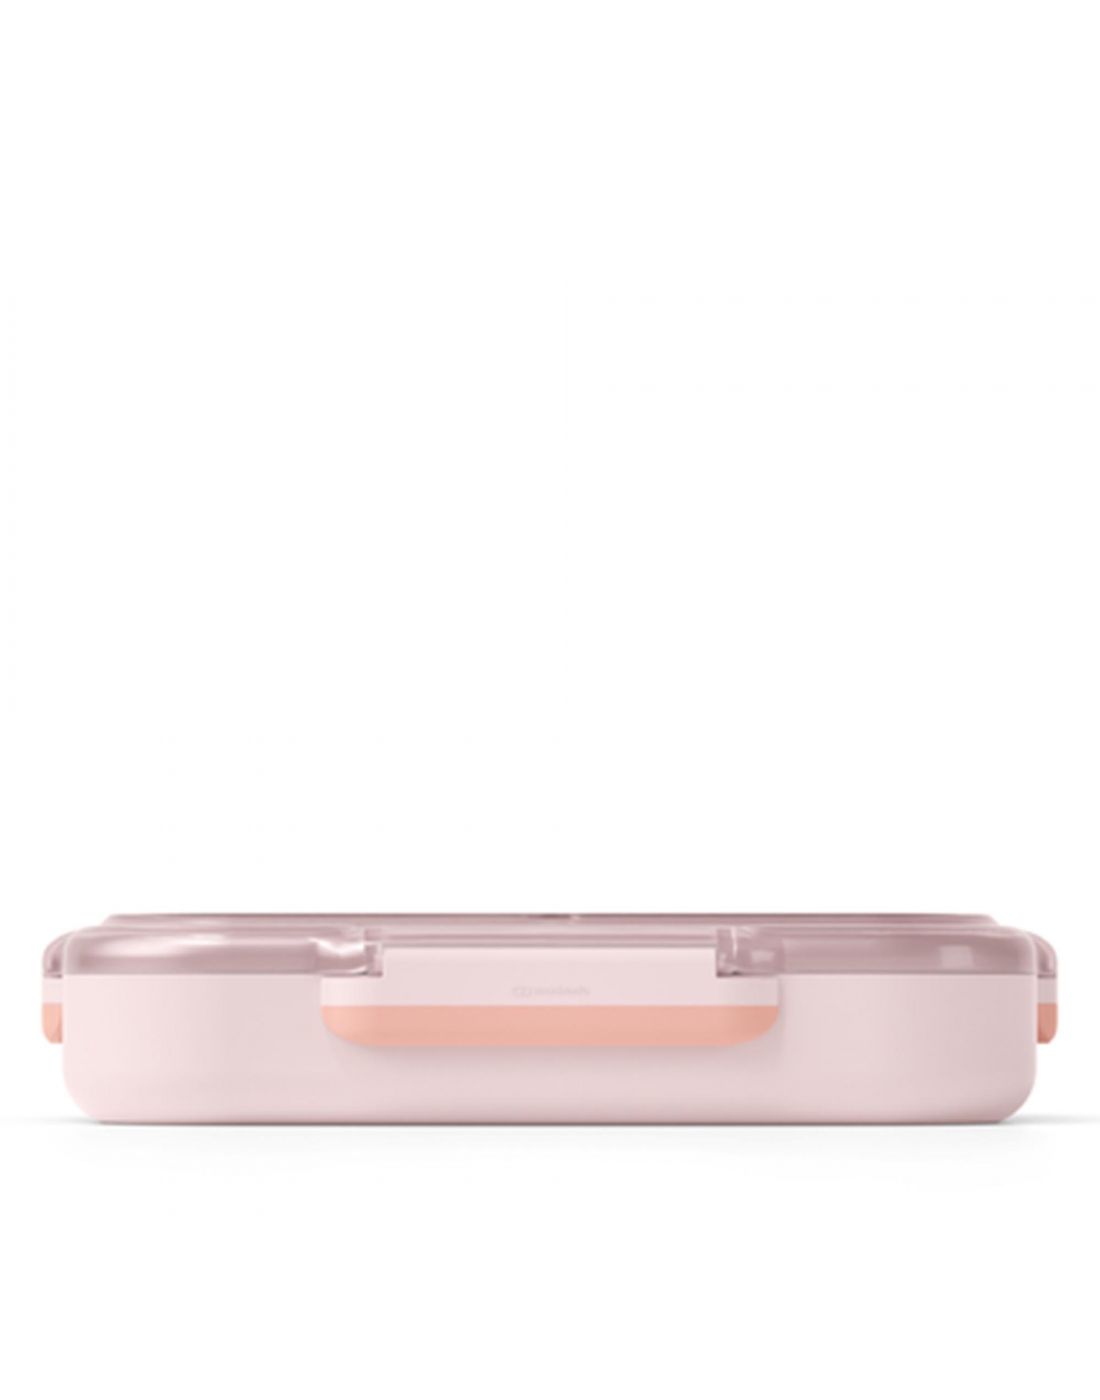 Monbento Kids  Compartmentalised Tray-Lunch Box 950ml ΜΒ Wonder Pink Sheep